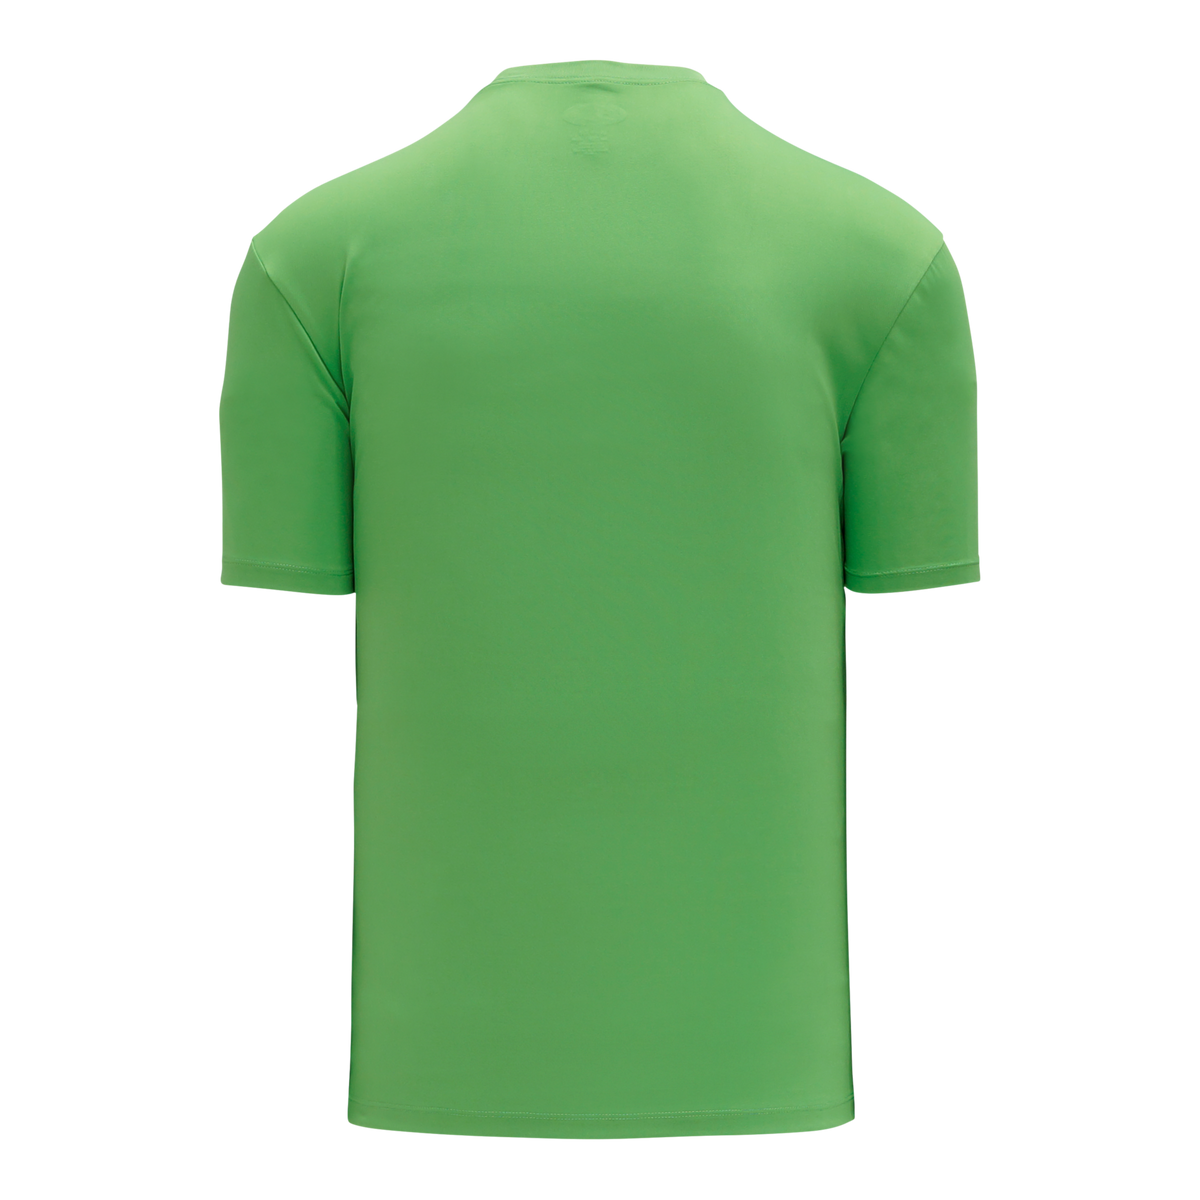 S1800 Soccer Jersey - Lime Green - Sports Jerseys Canada